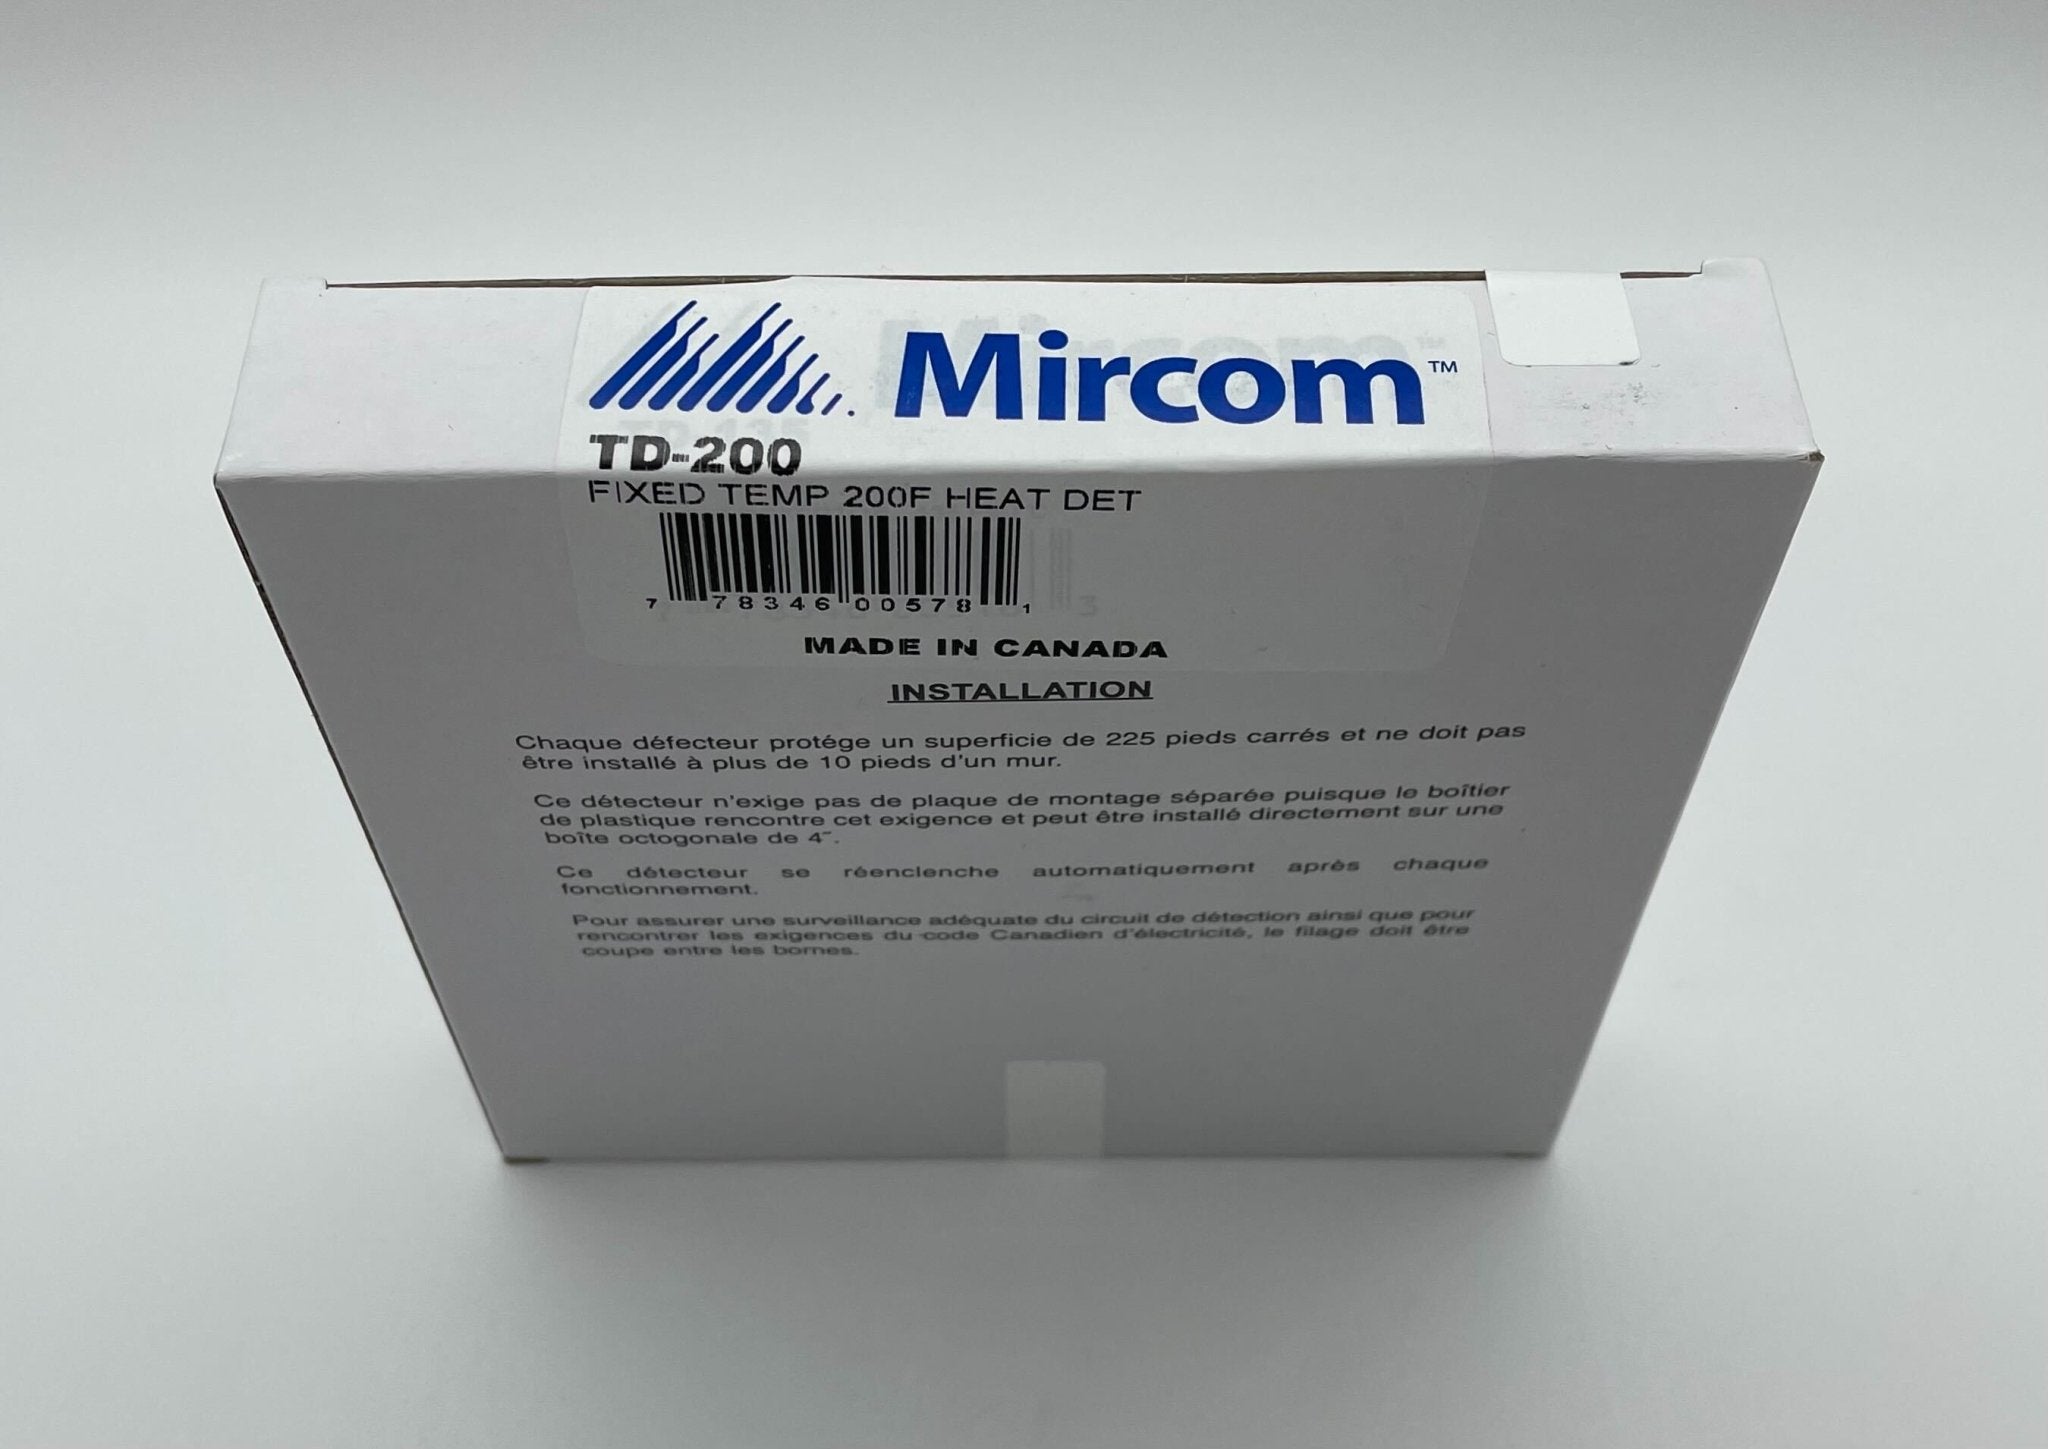 Mircom TD-200 - The Fire Alarm Supplier